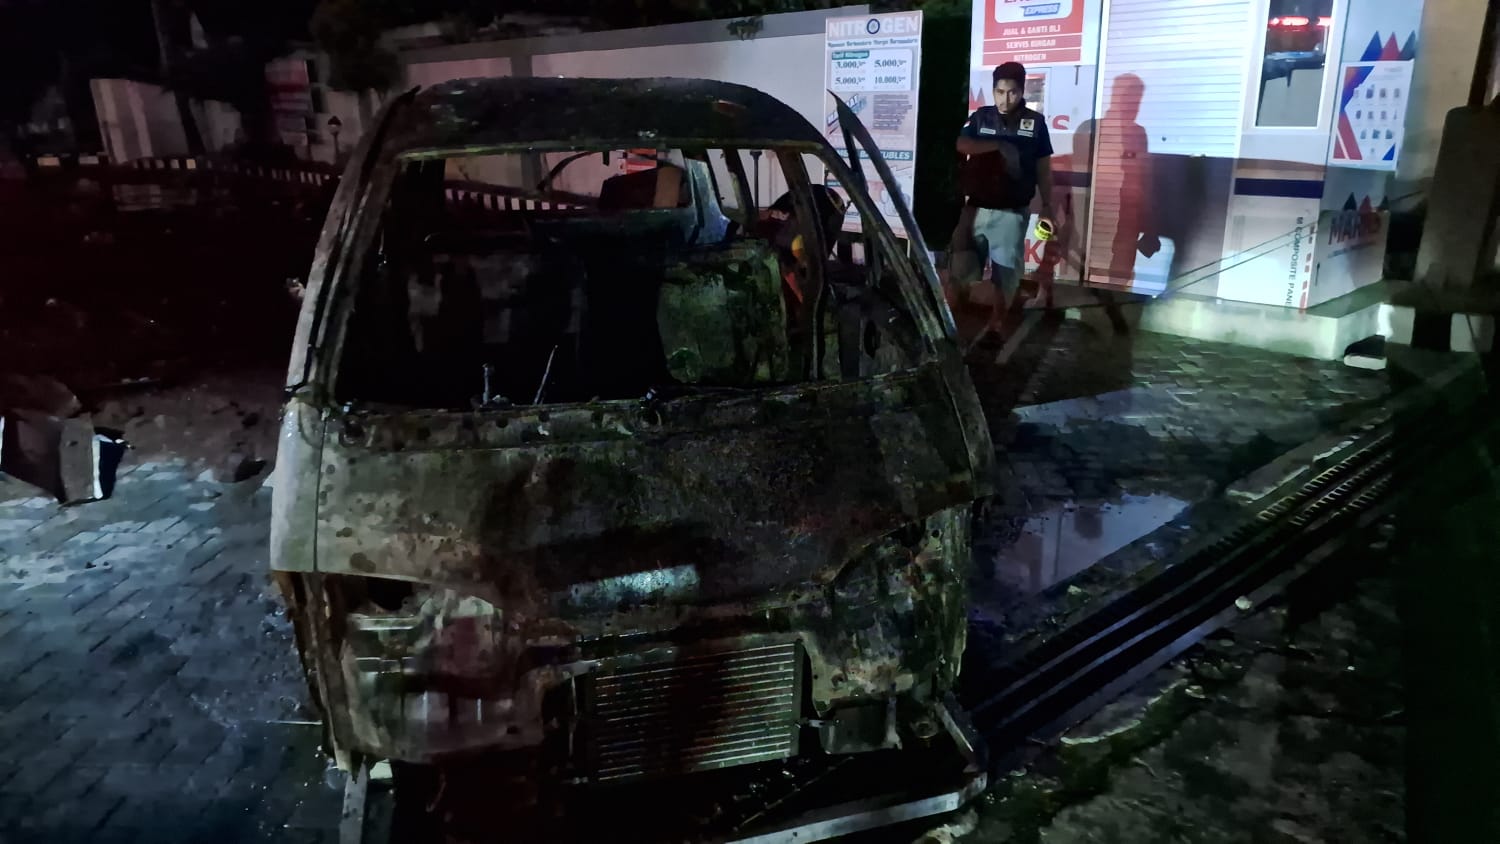 Mobil Espass yang terbakar di SPBU Kanigoro, Kras, Kediri (Dokumen Polsek Kras, Kediri)